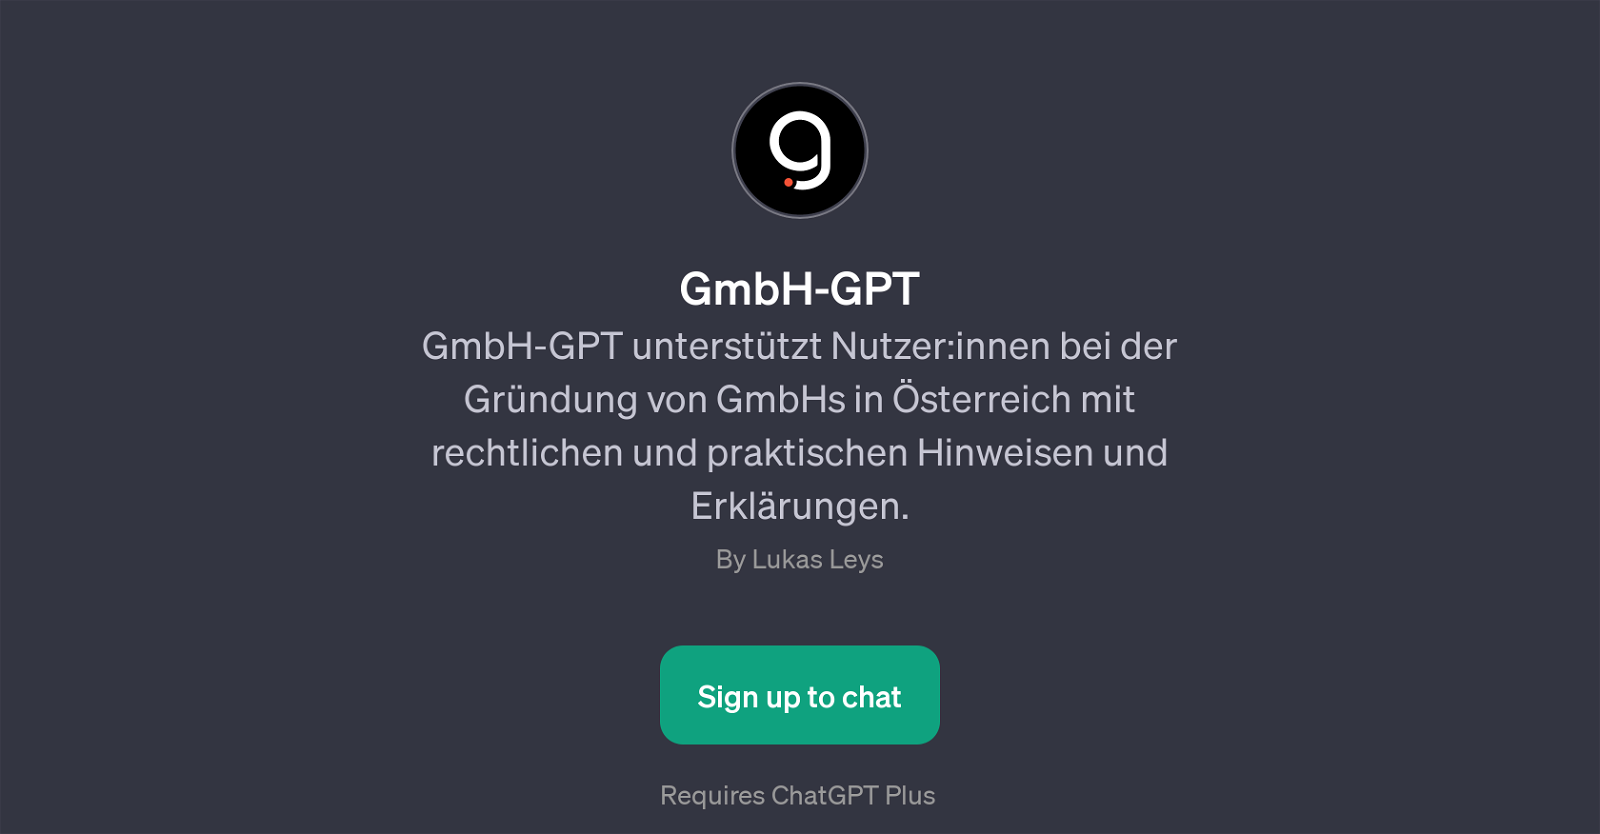 GmbH-GPT website